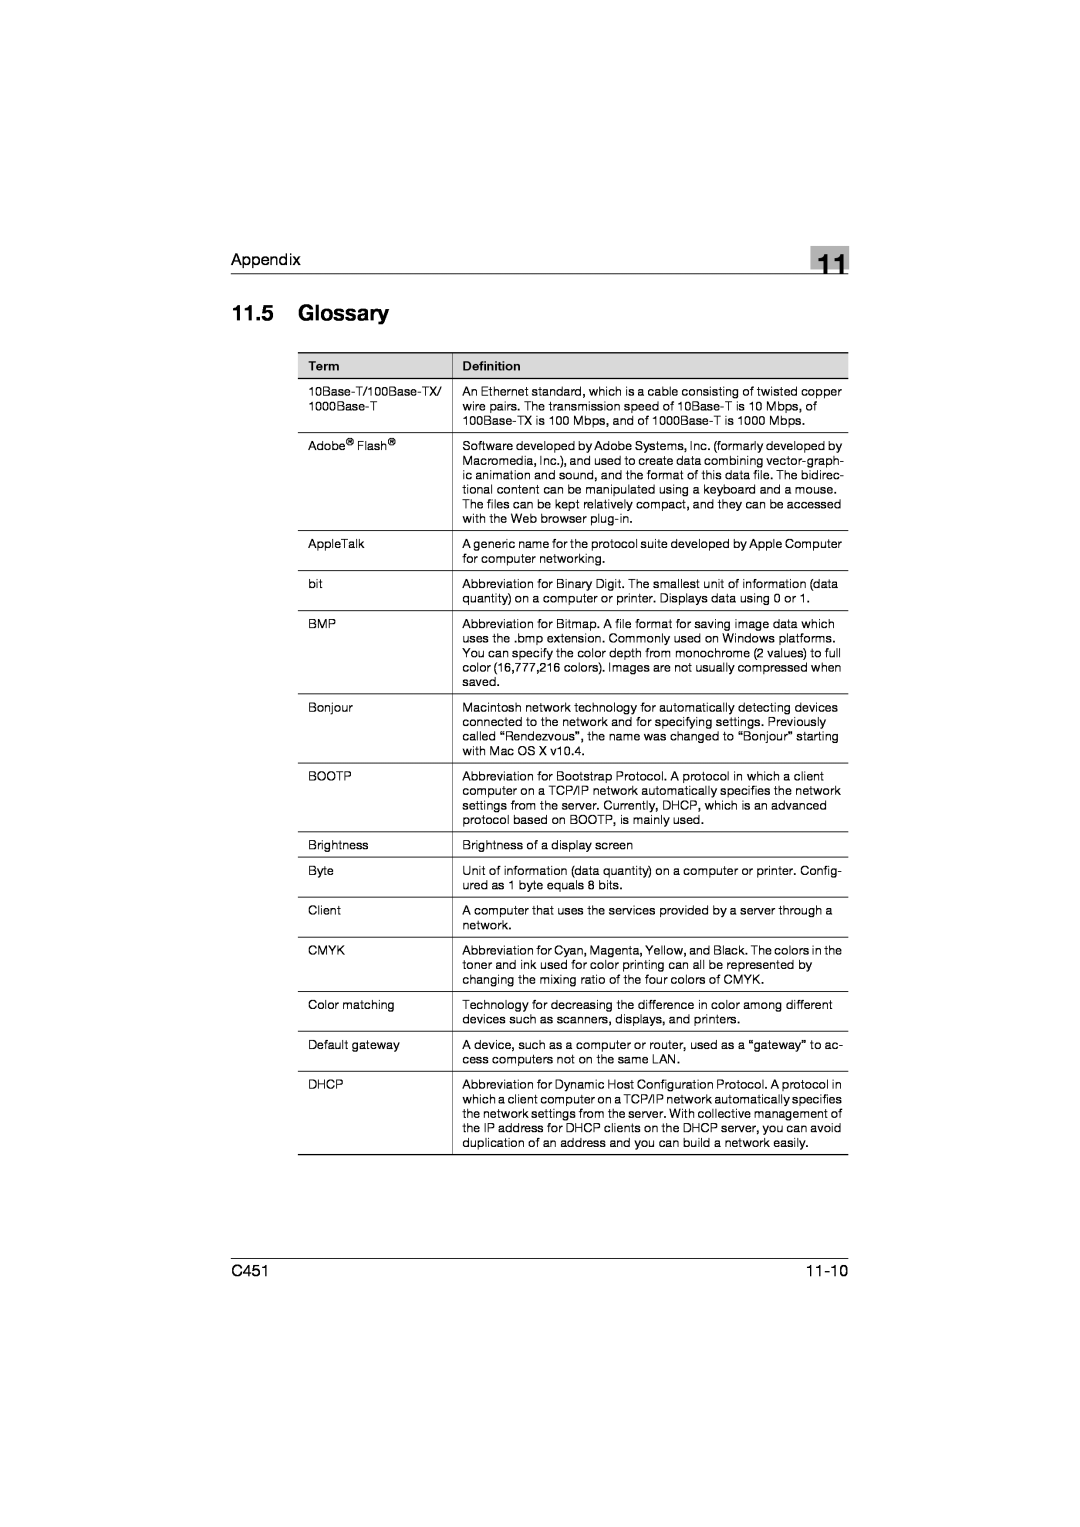 Konica Minolta C451 manual 11.5Glossary, Appendix, 11-10 